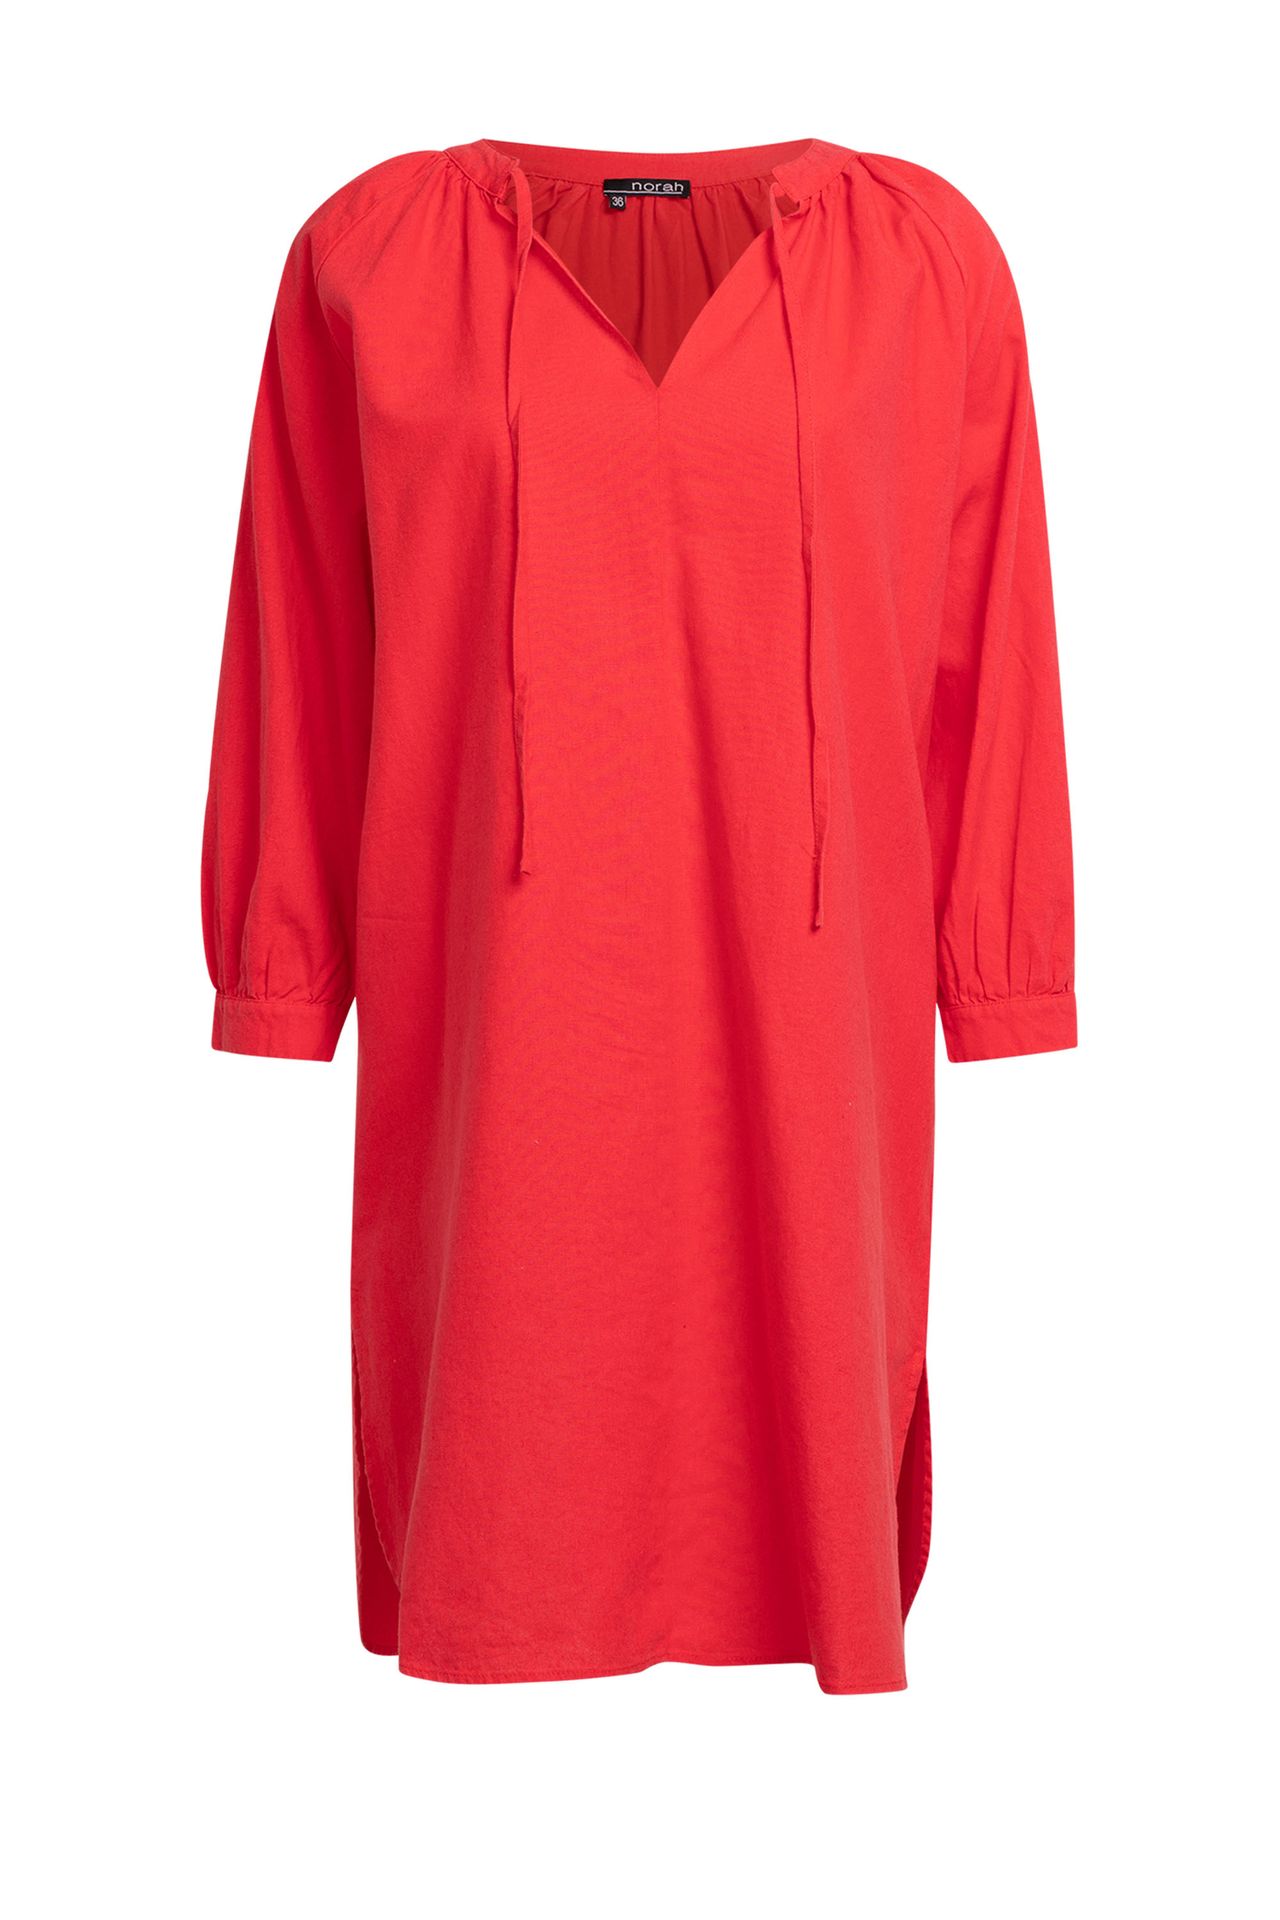 Norah Linnen jurk rood red 211214-600